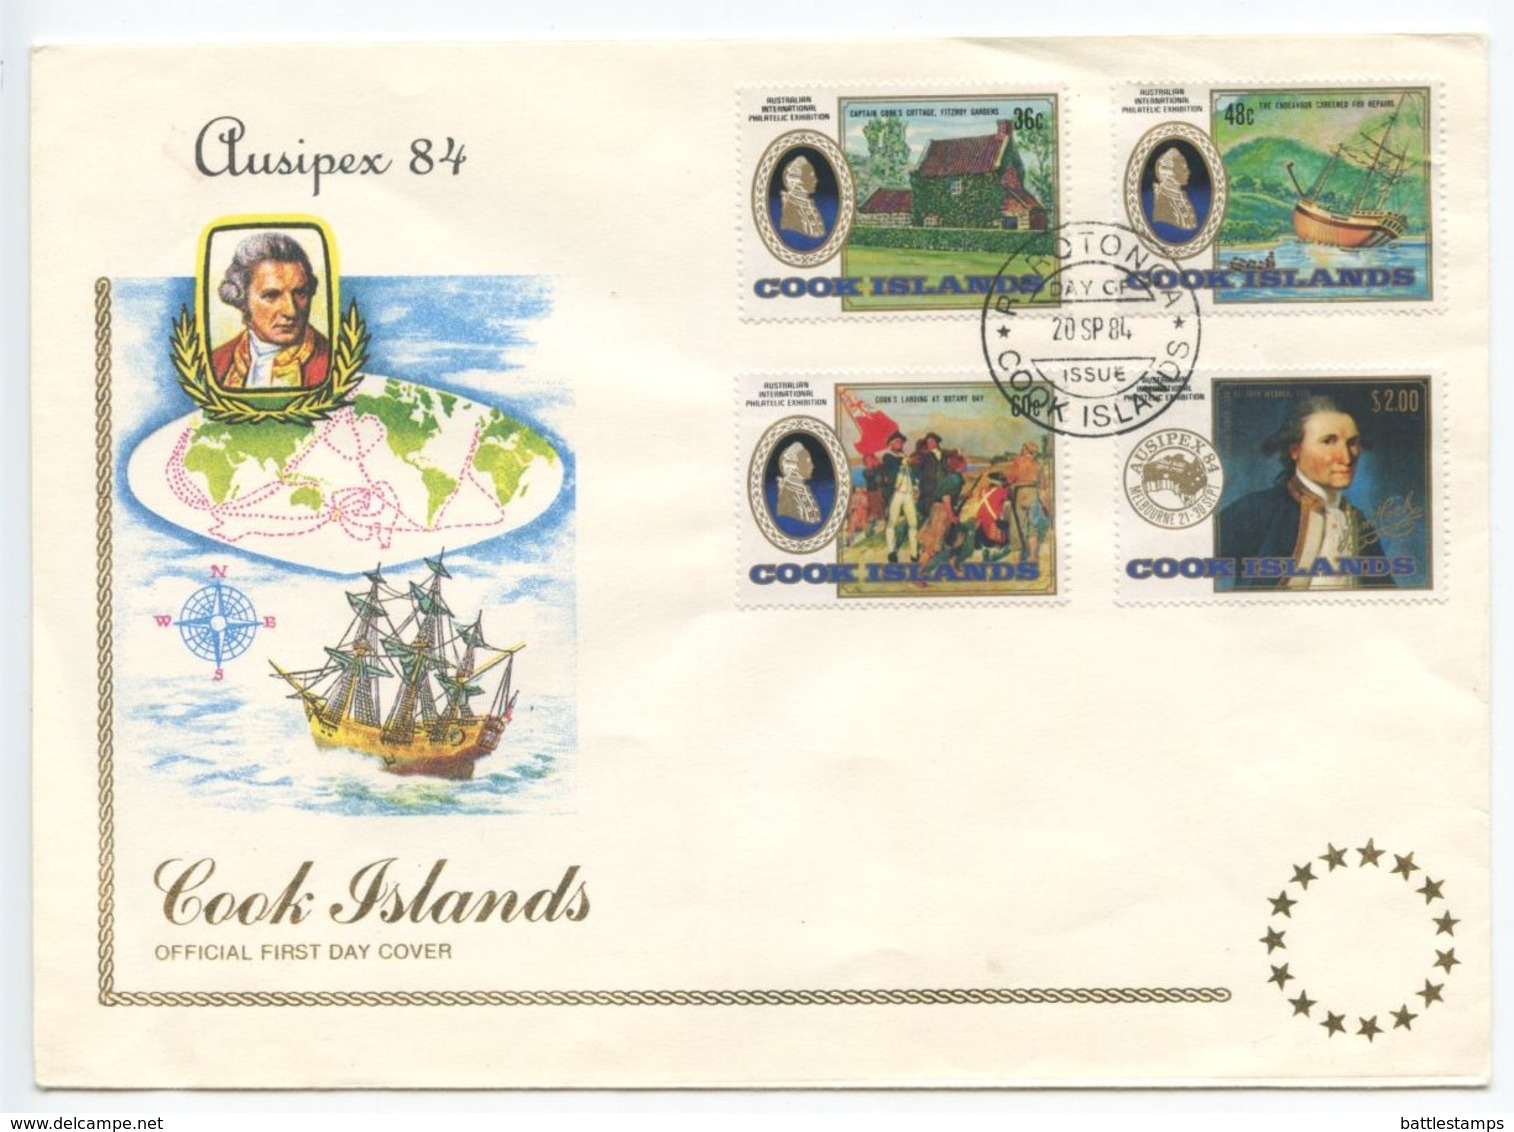 Cook Islands 1984 FDC Scott 829-832 Ausipex '84 Philatelic Exhibition - Cook